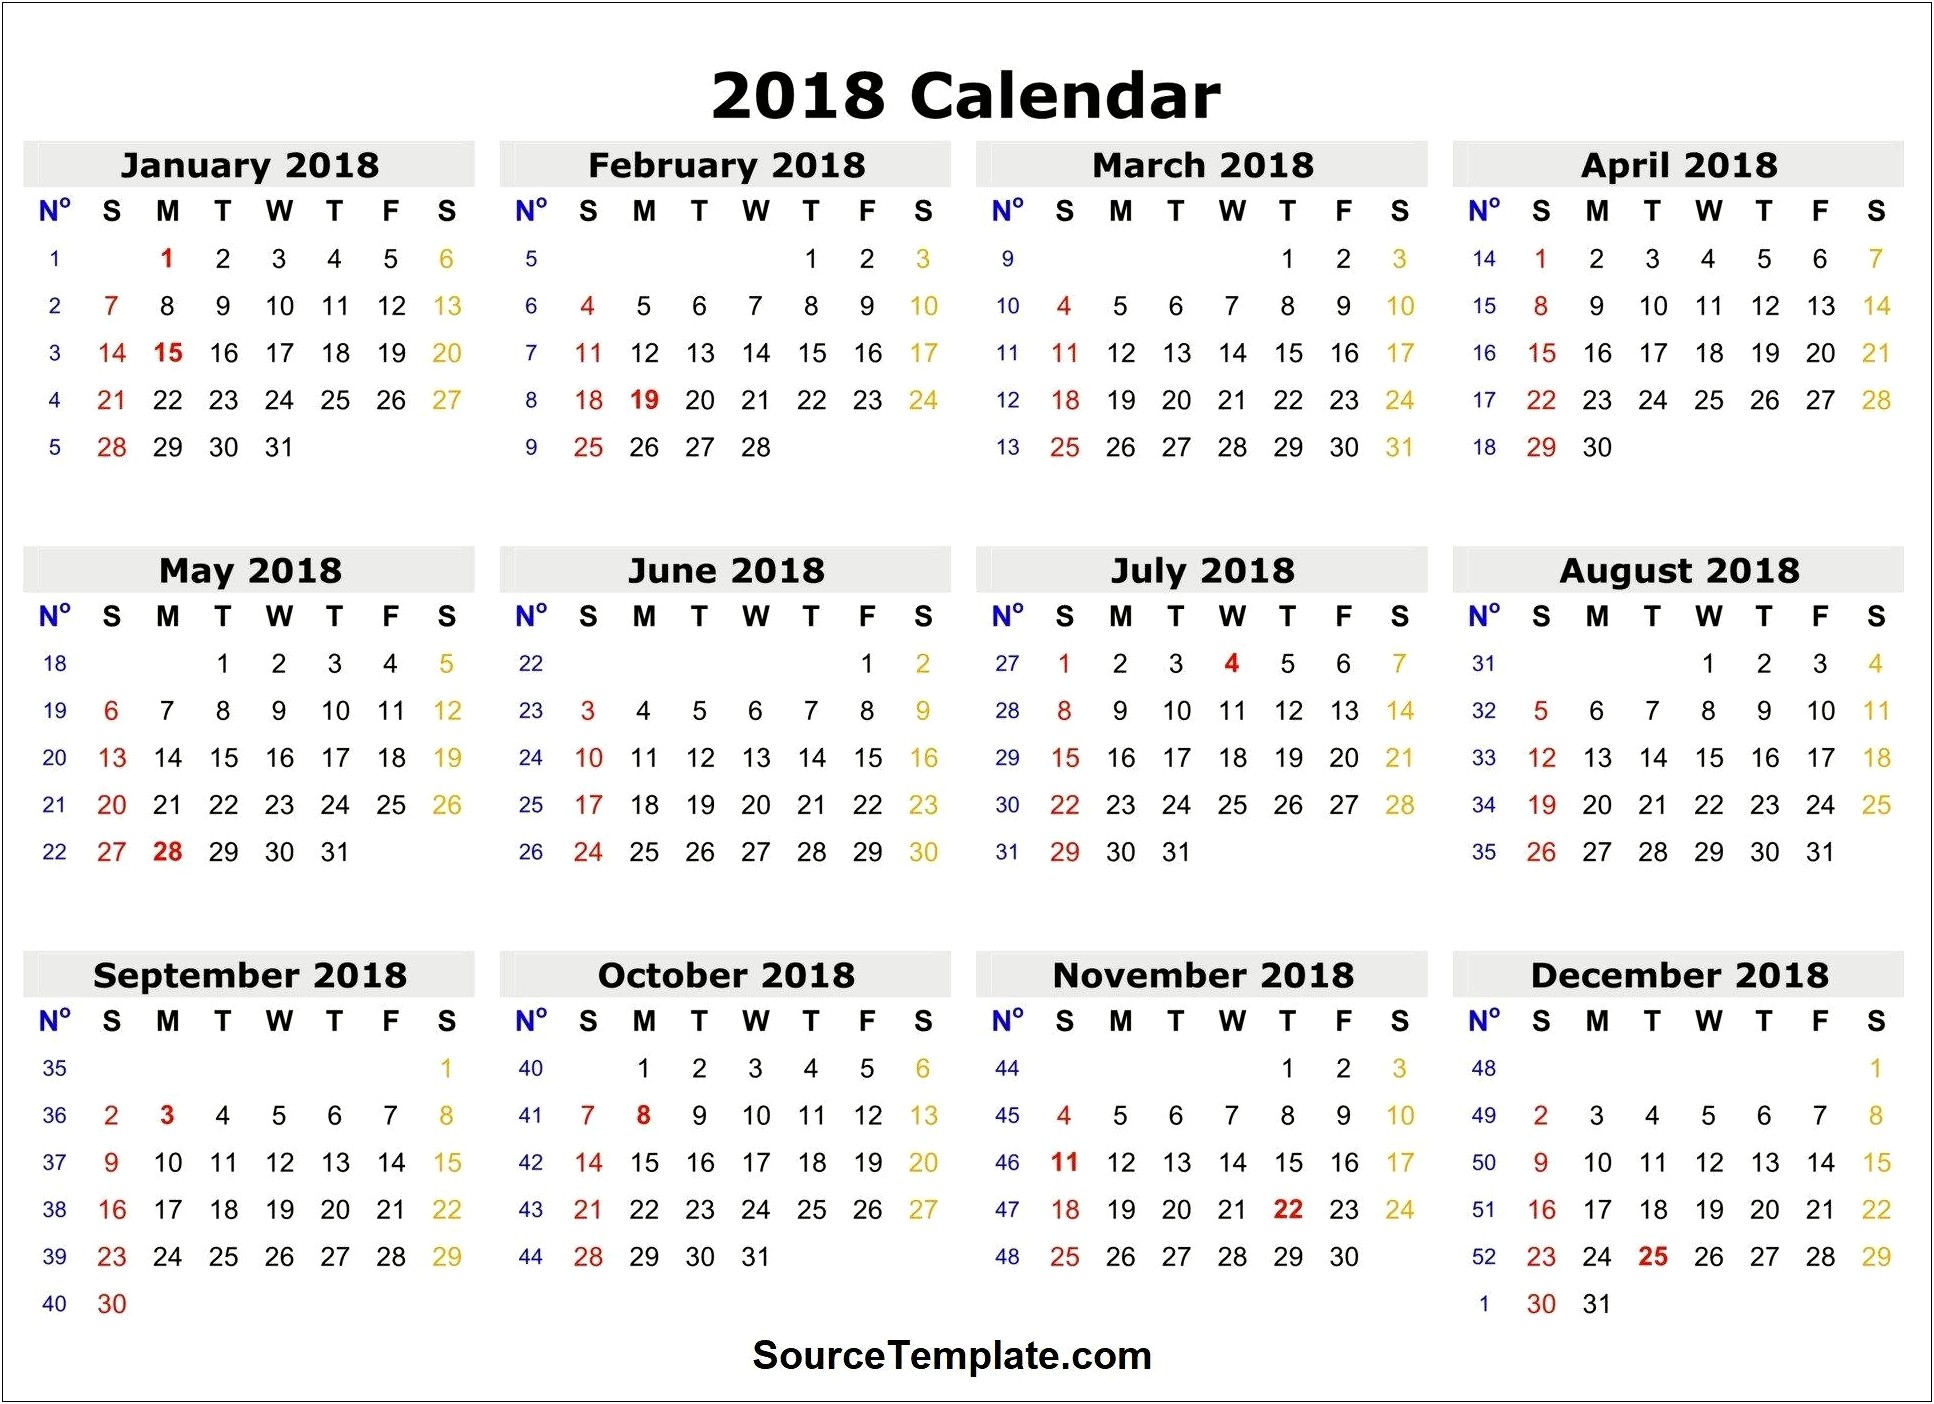 2017 Calendar Template Psd Free Download